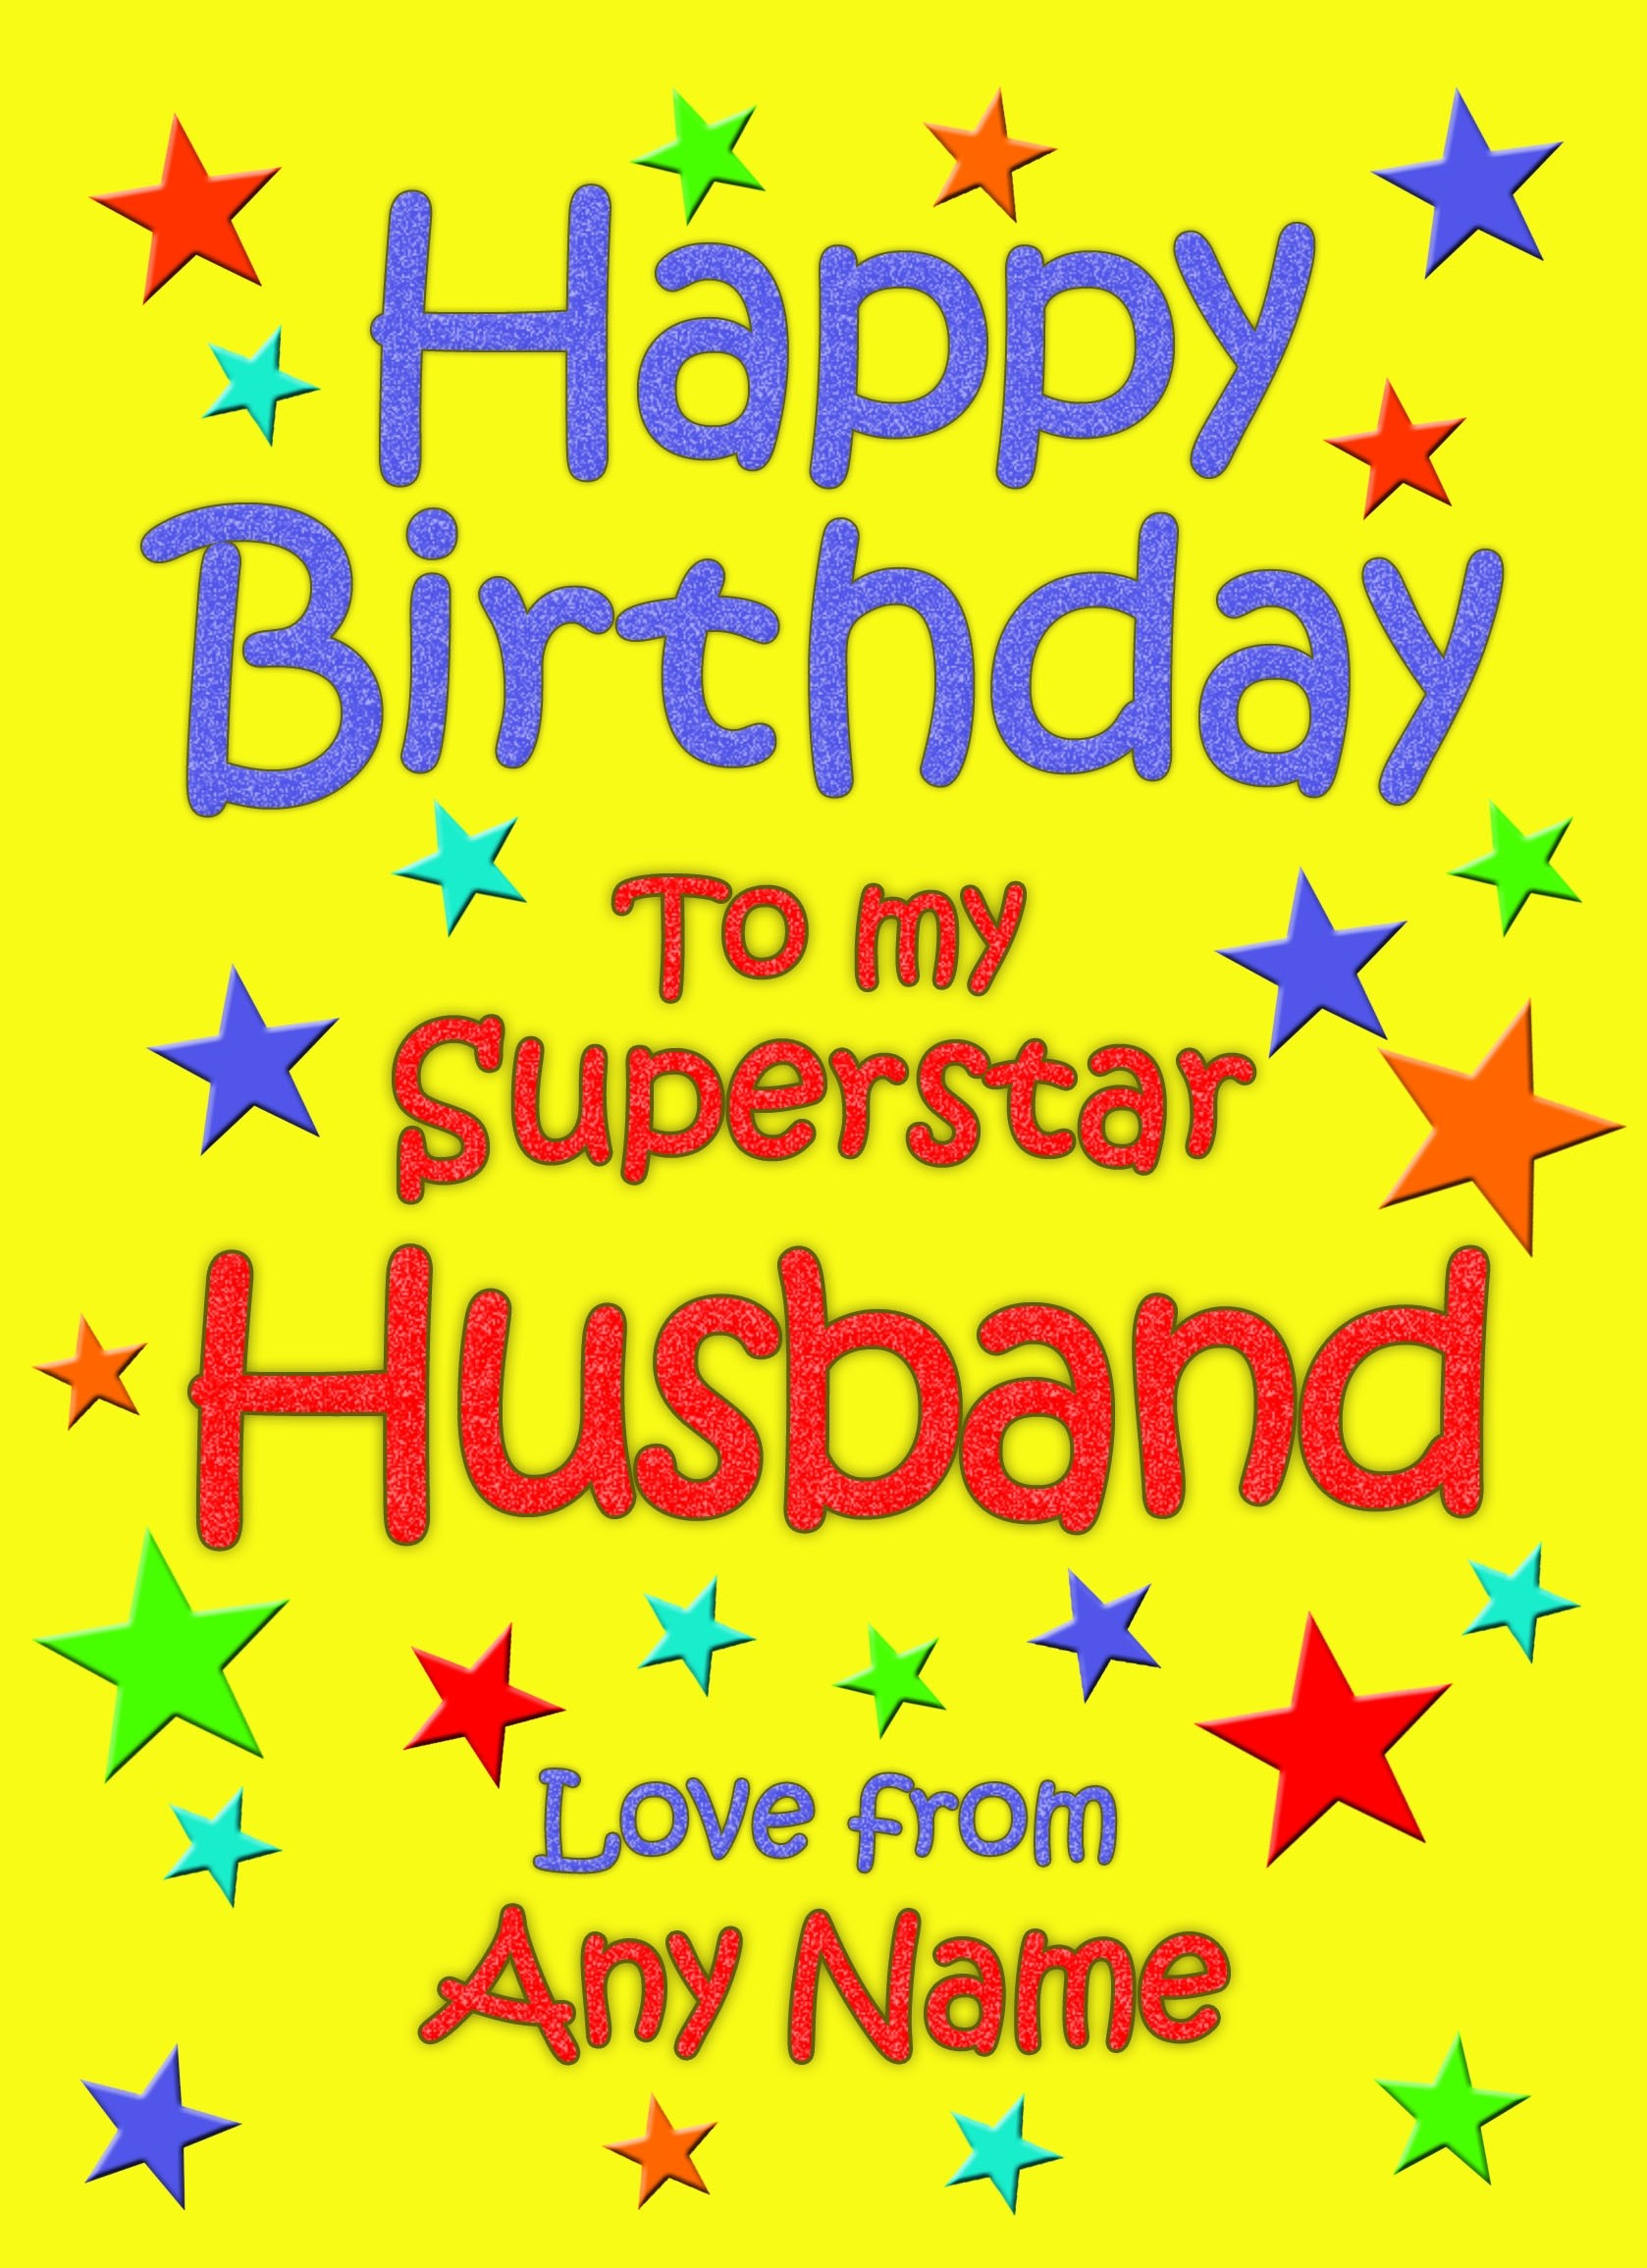 Personalised Husband Birthday Card (Yellow)